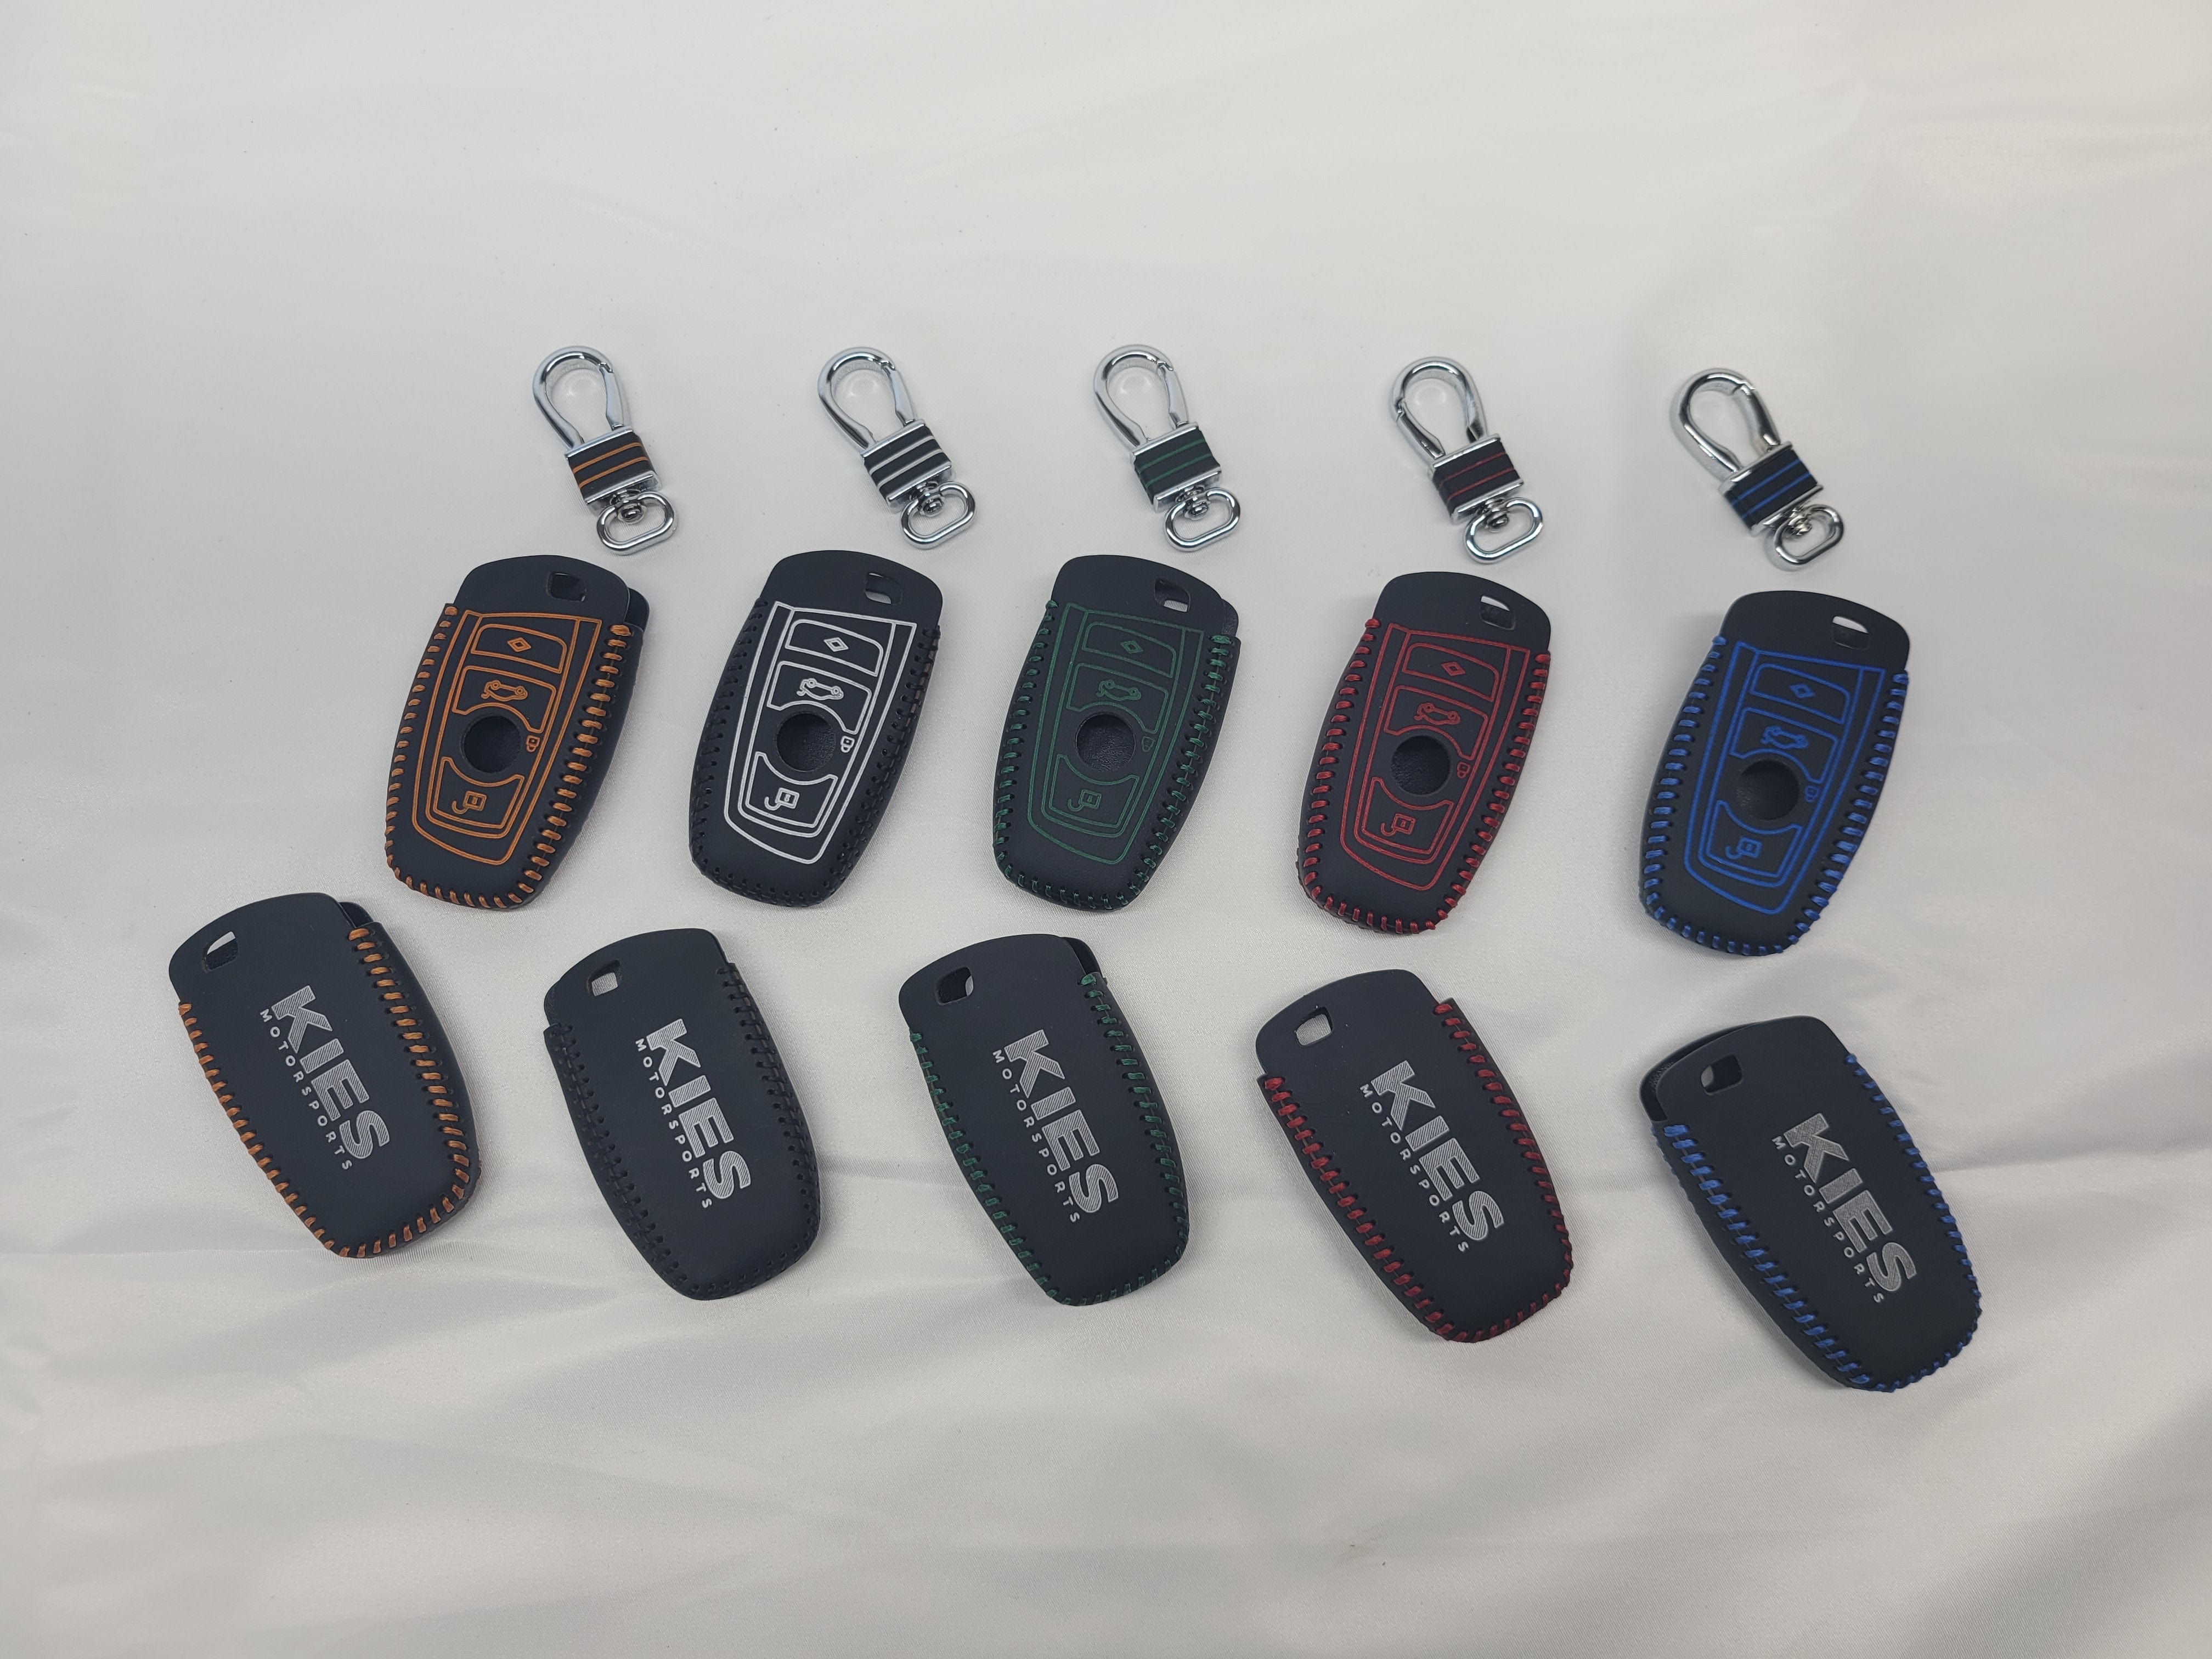 Kies Motorsports Real Leather F Series BMW Key Protector Keychain (New